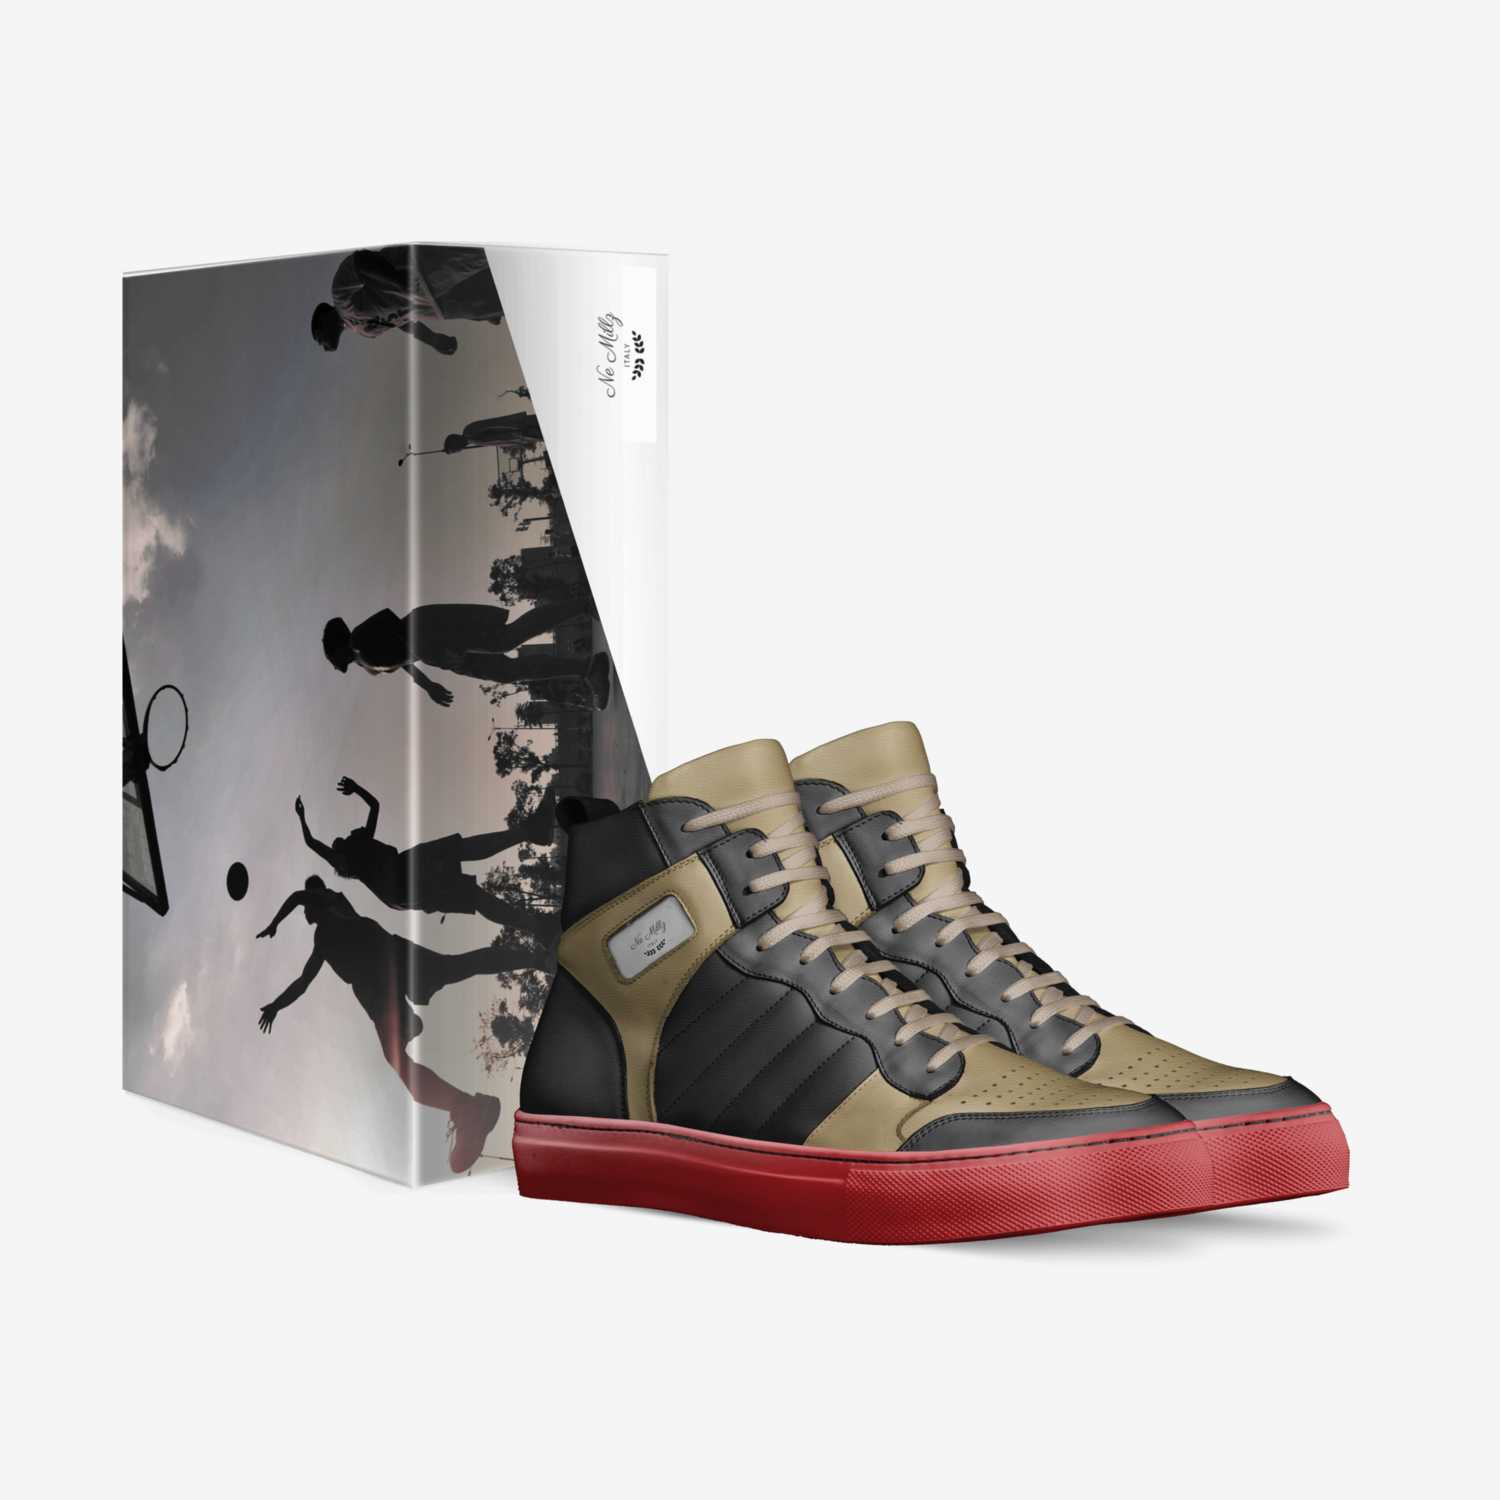 Ne Millz custom made in Italy shoes by Ahdrene Gray | Box view